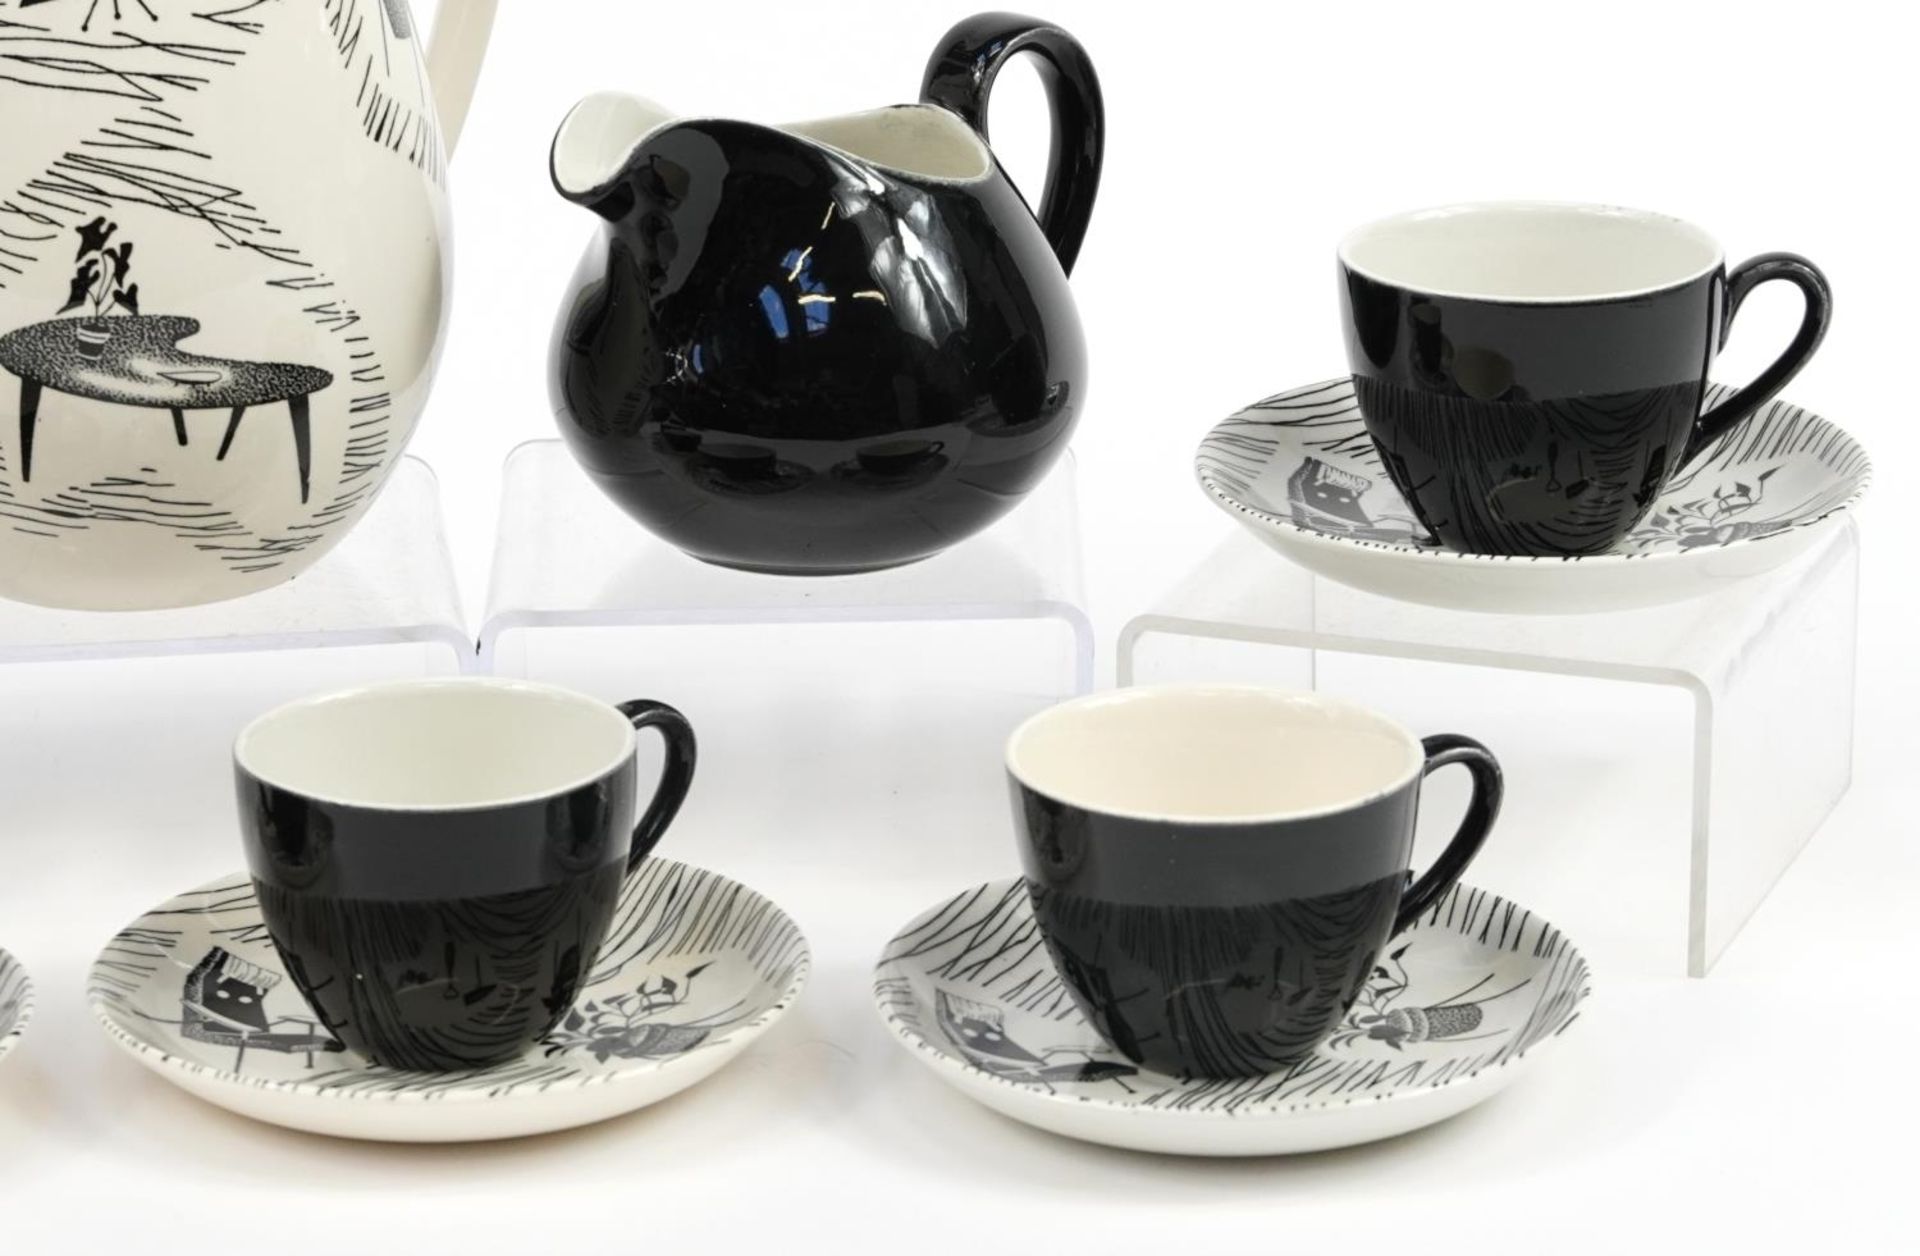 Ridgeways Homemaker six place coffee set comprising coffee pot, milk jug, sugar bowl and six cups - Image 3 of 4